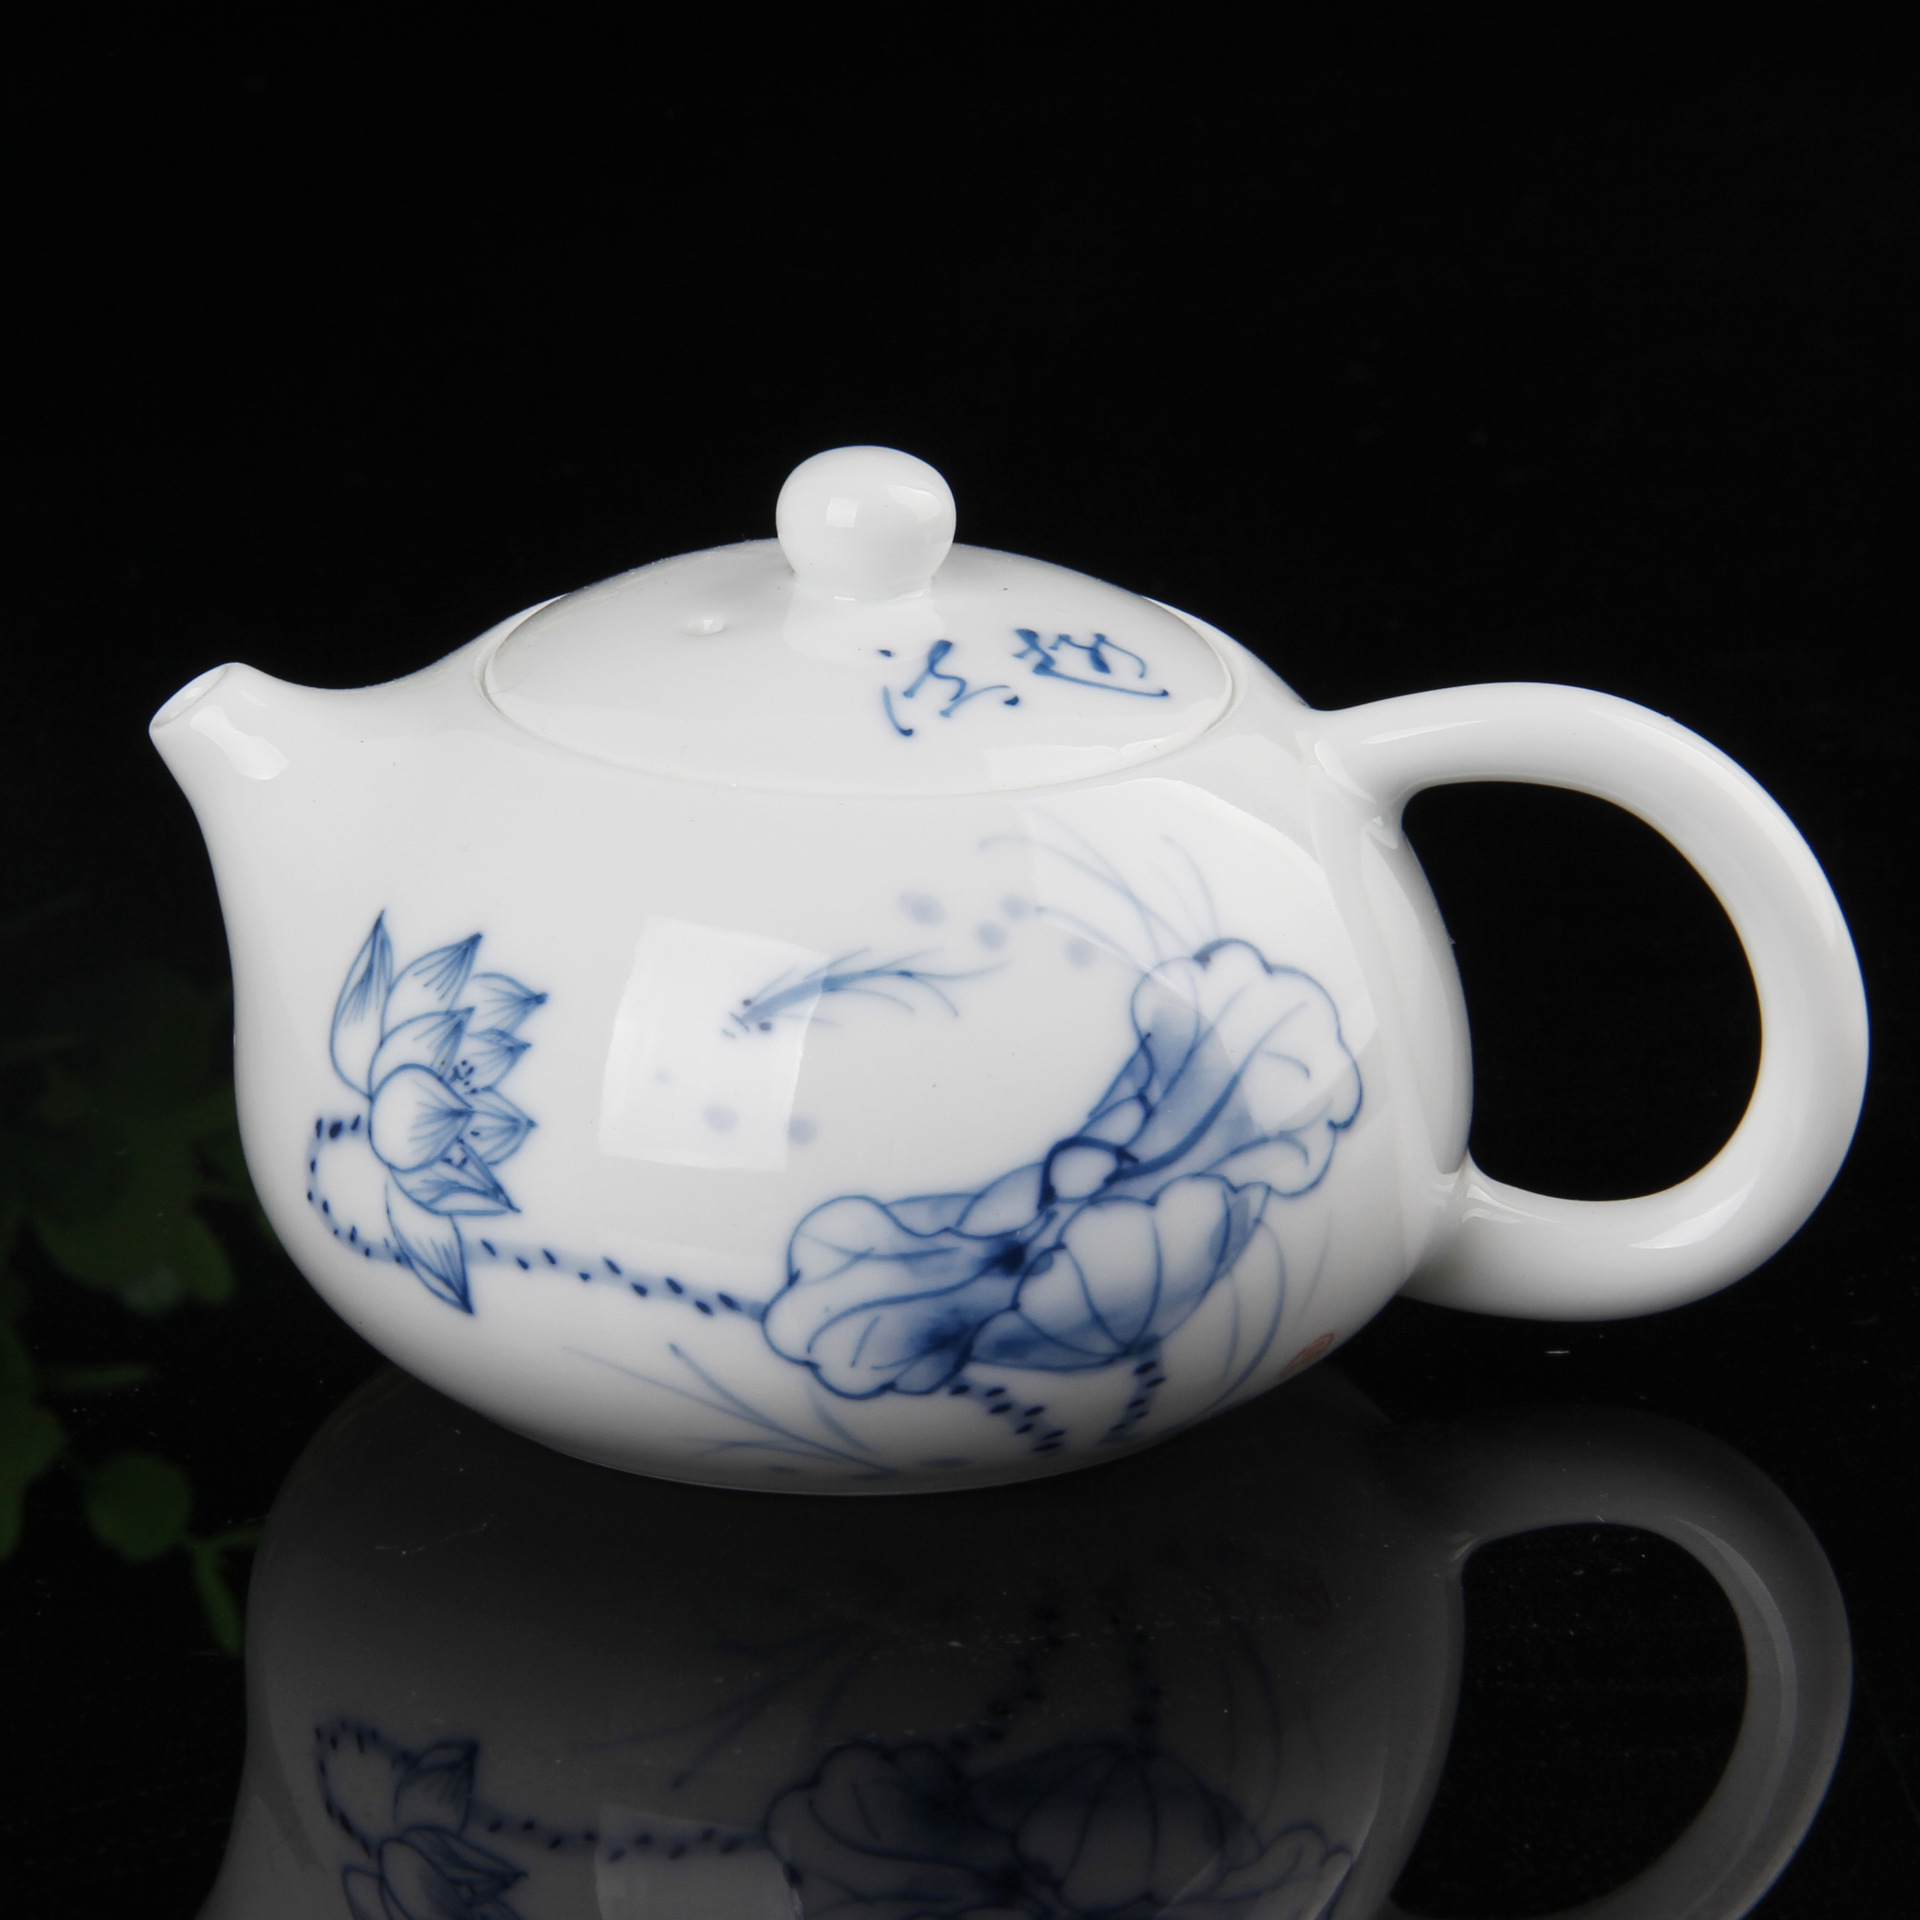 Master of technology high end hand painted Qinghua tea teapot pot lotus beauty